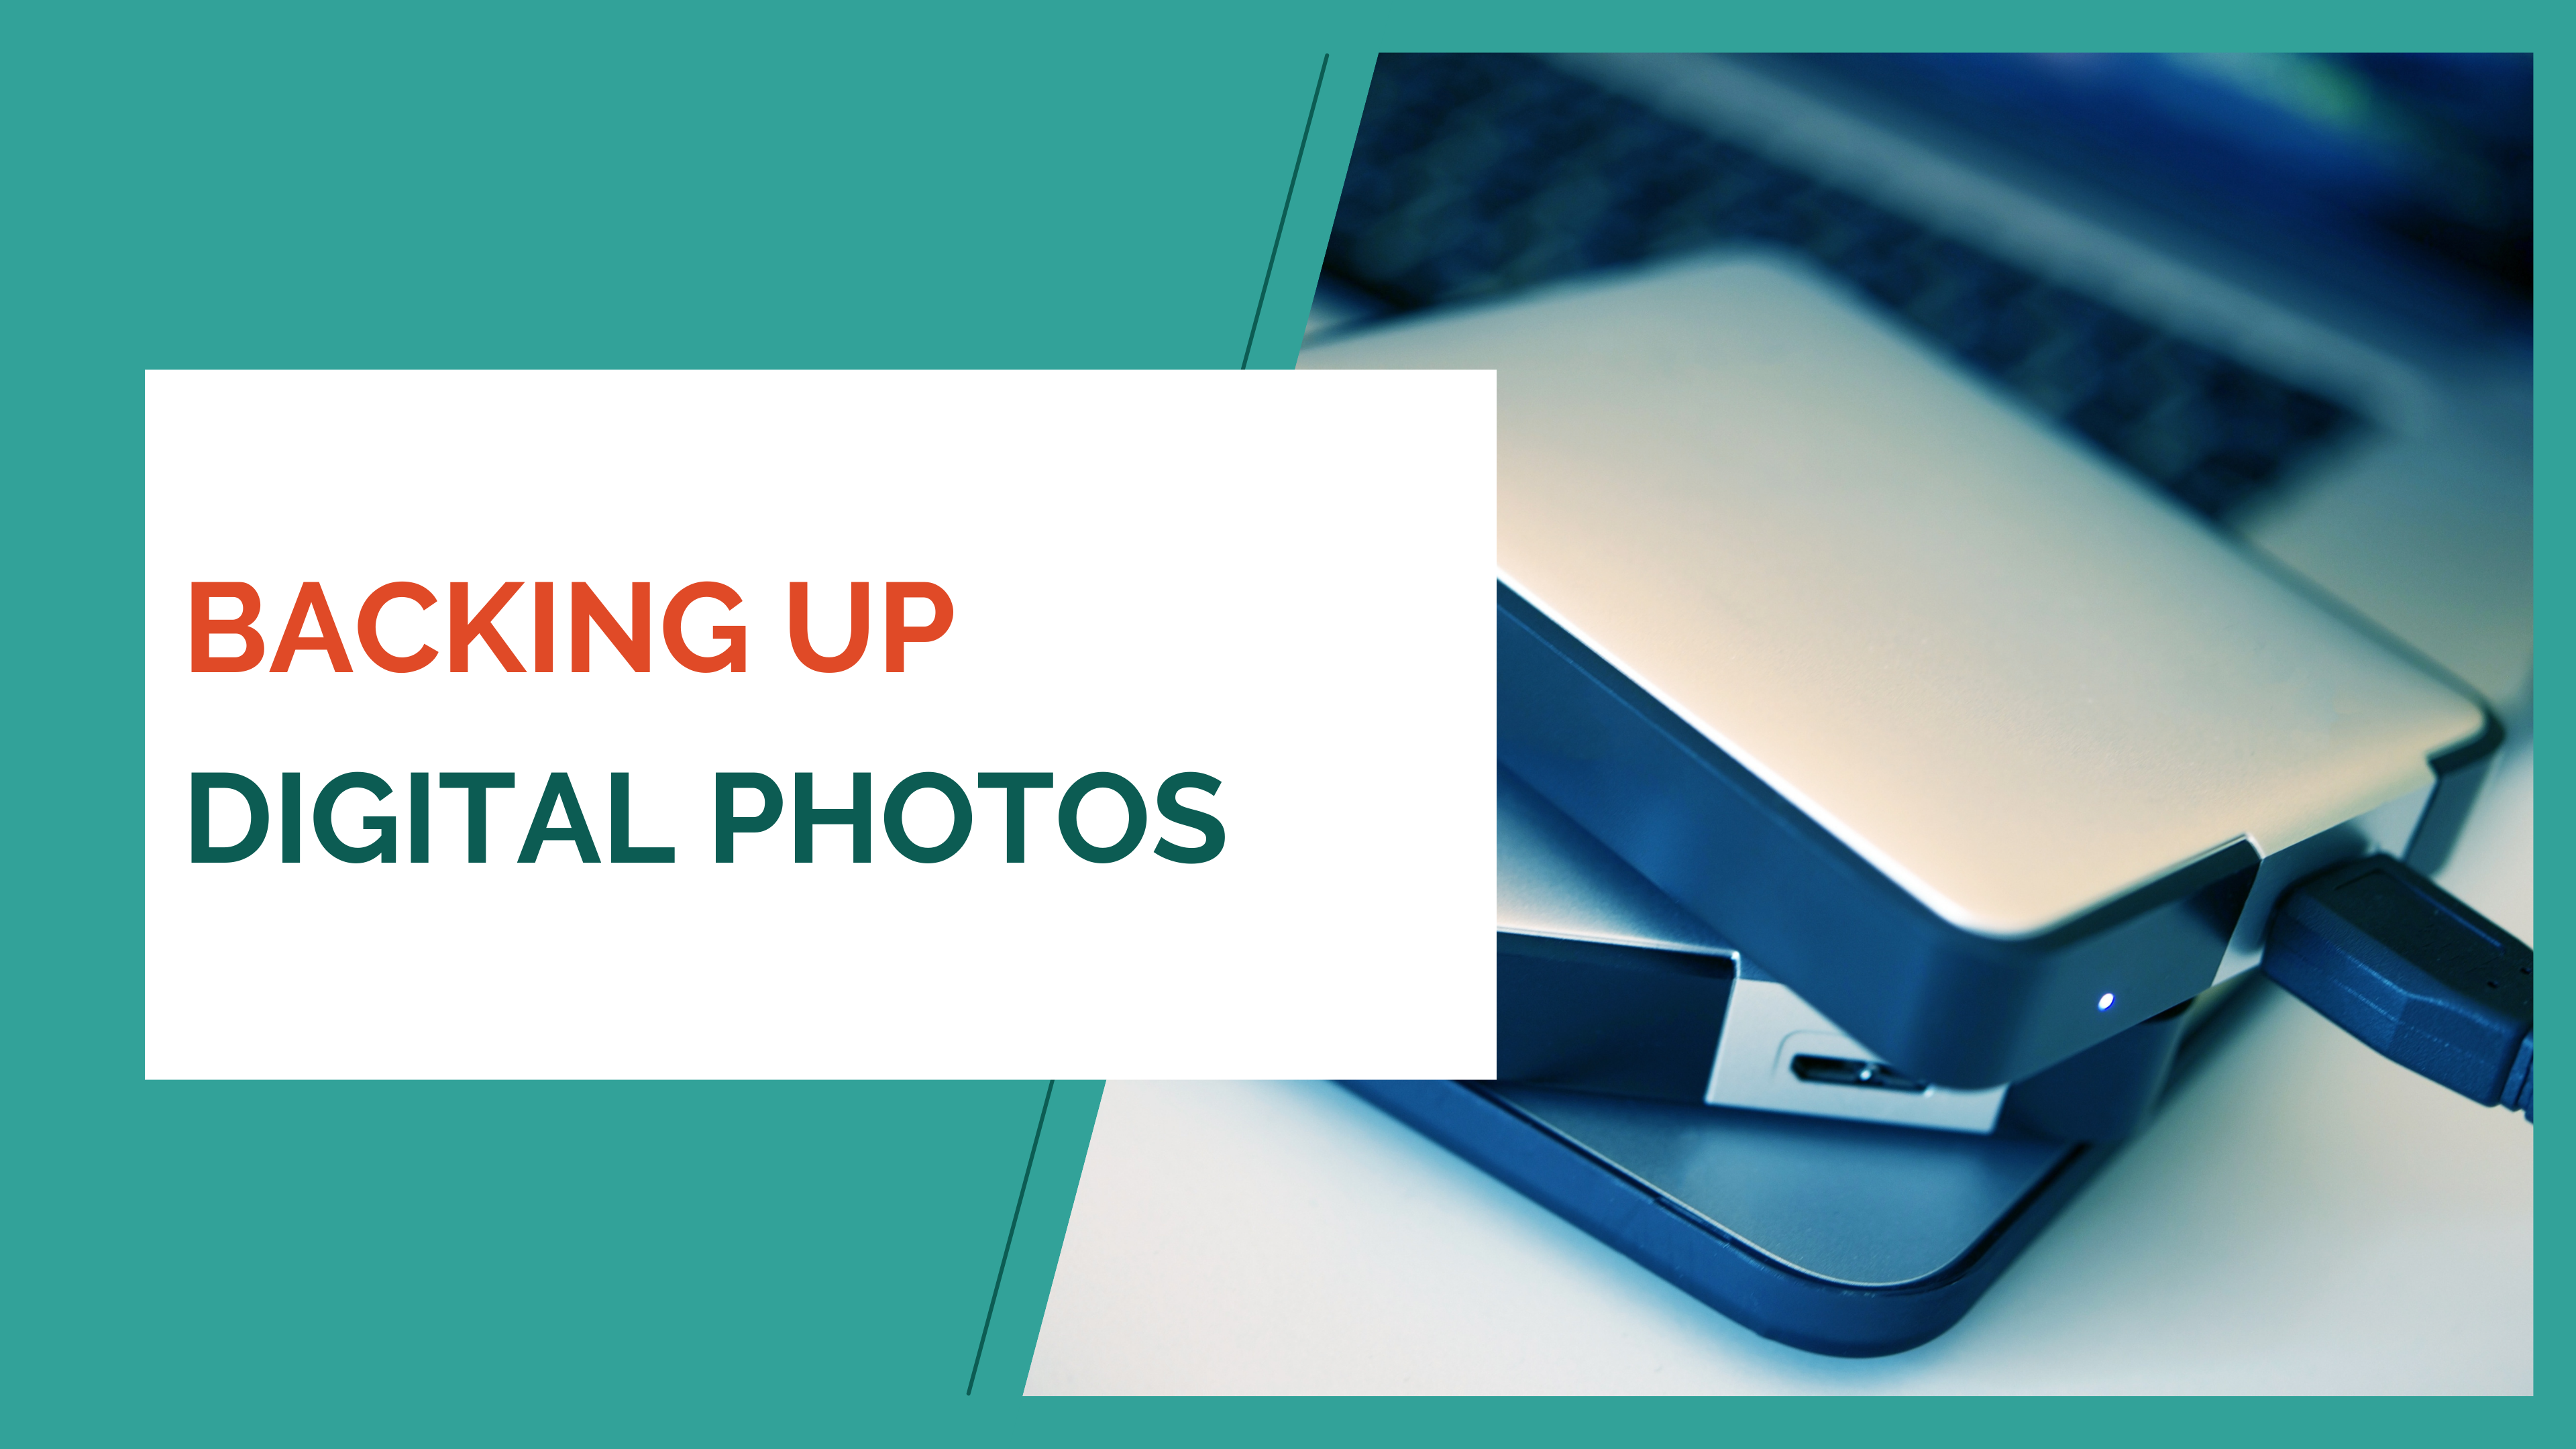 Backing up digital photos